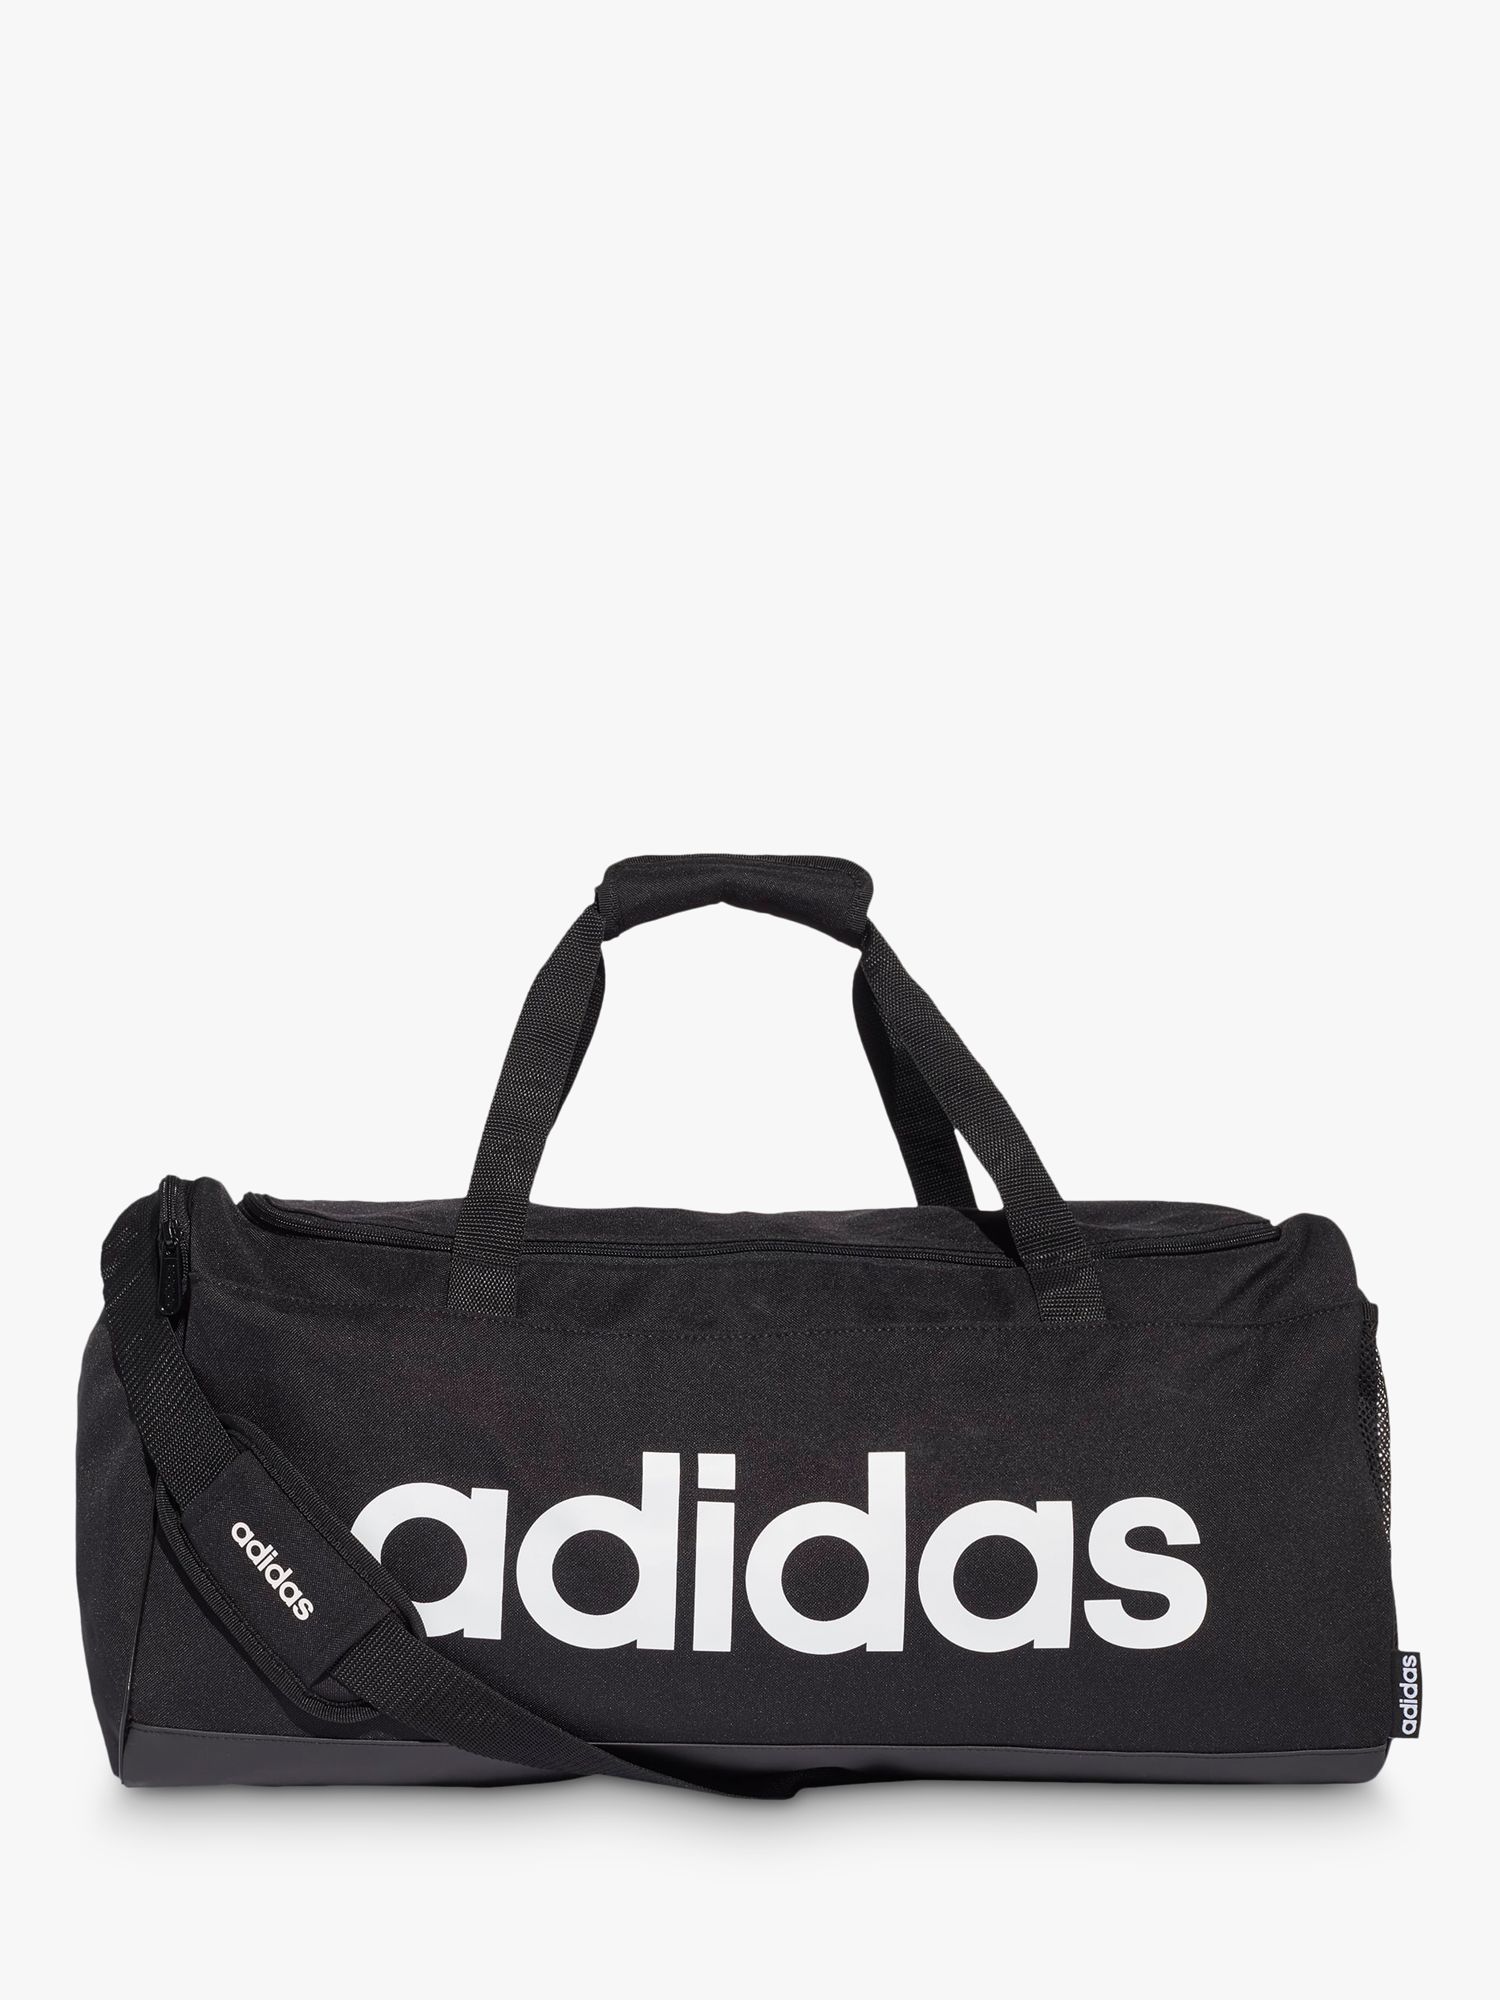 adidas Linear Duffel Bag, Black/White